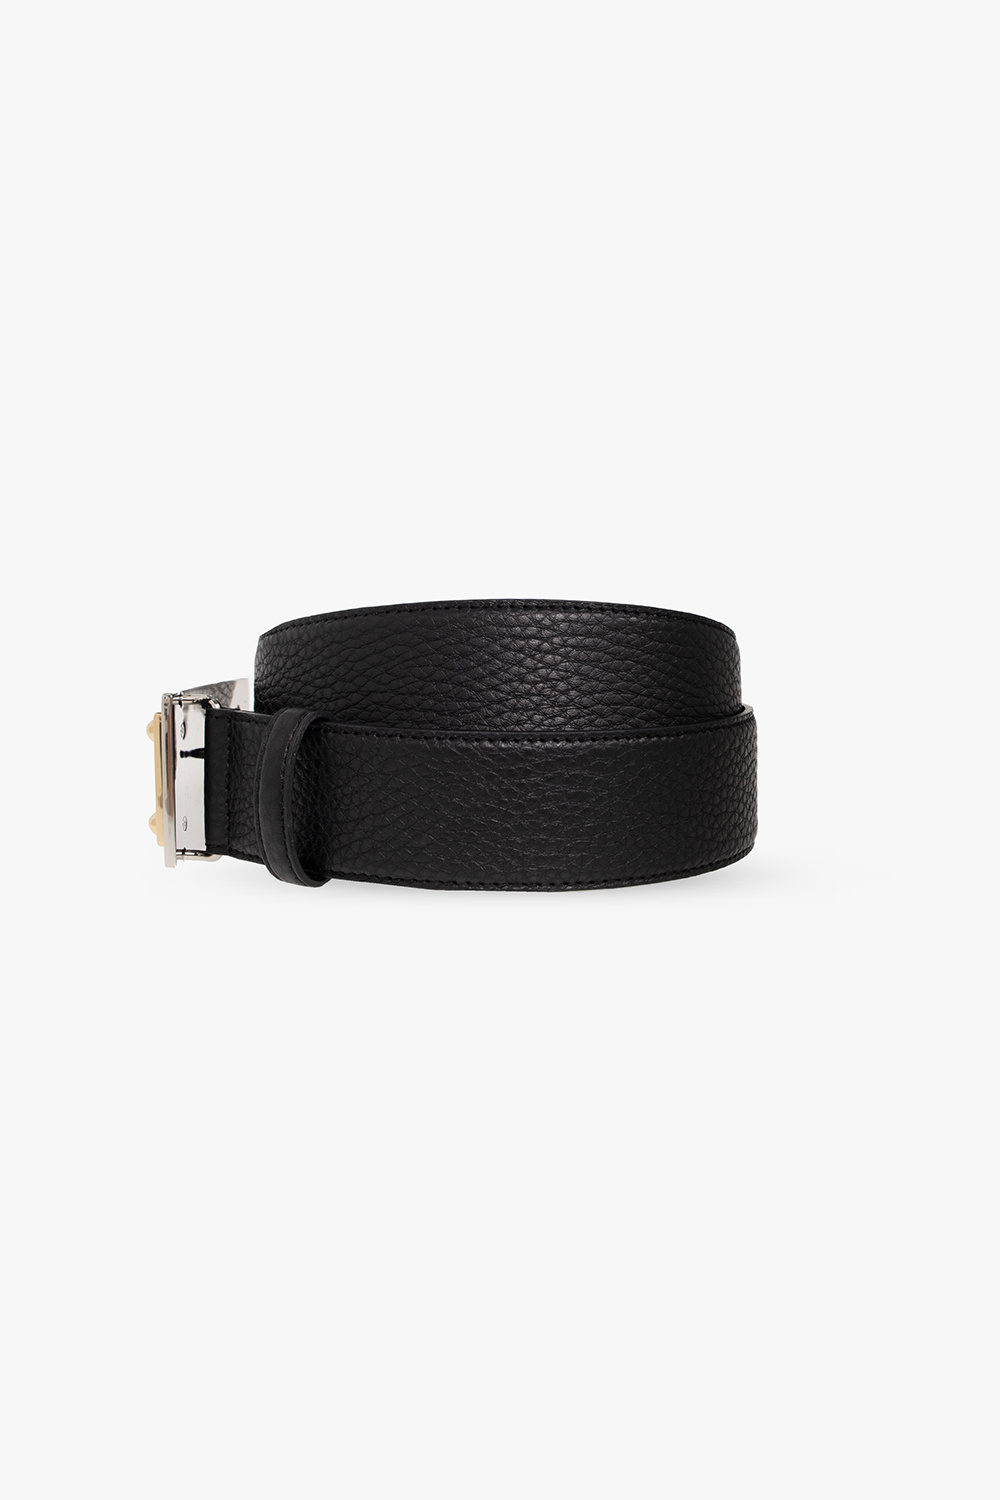 Dolce & Gabbana Tweed Leather belt